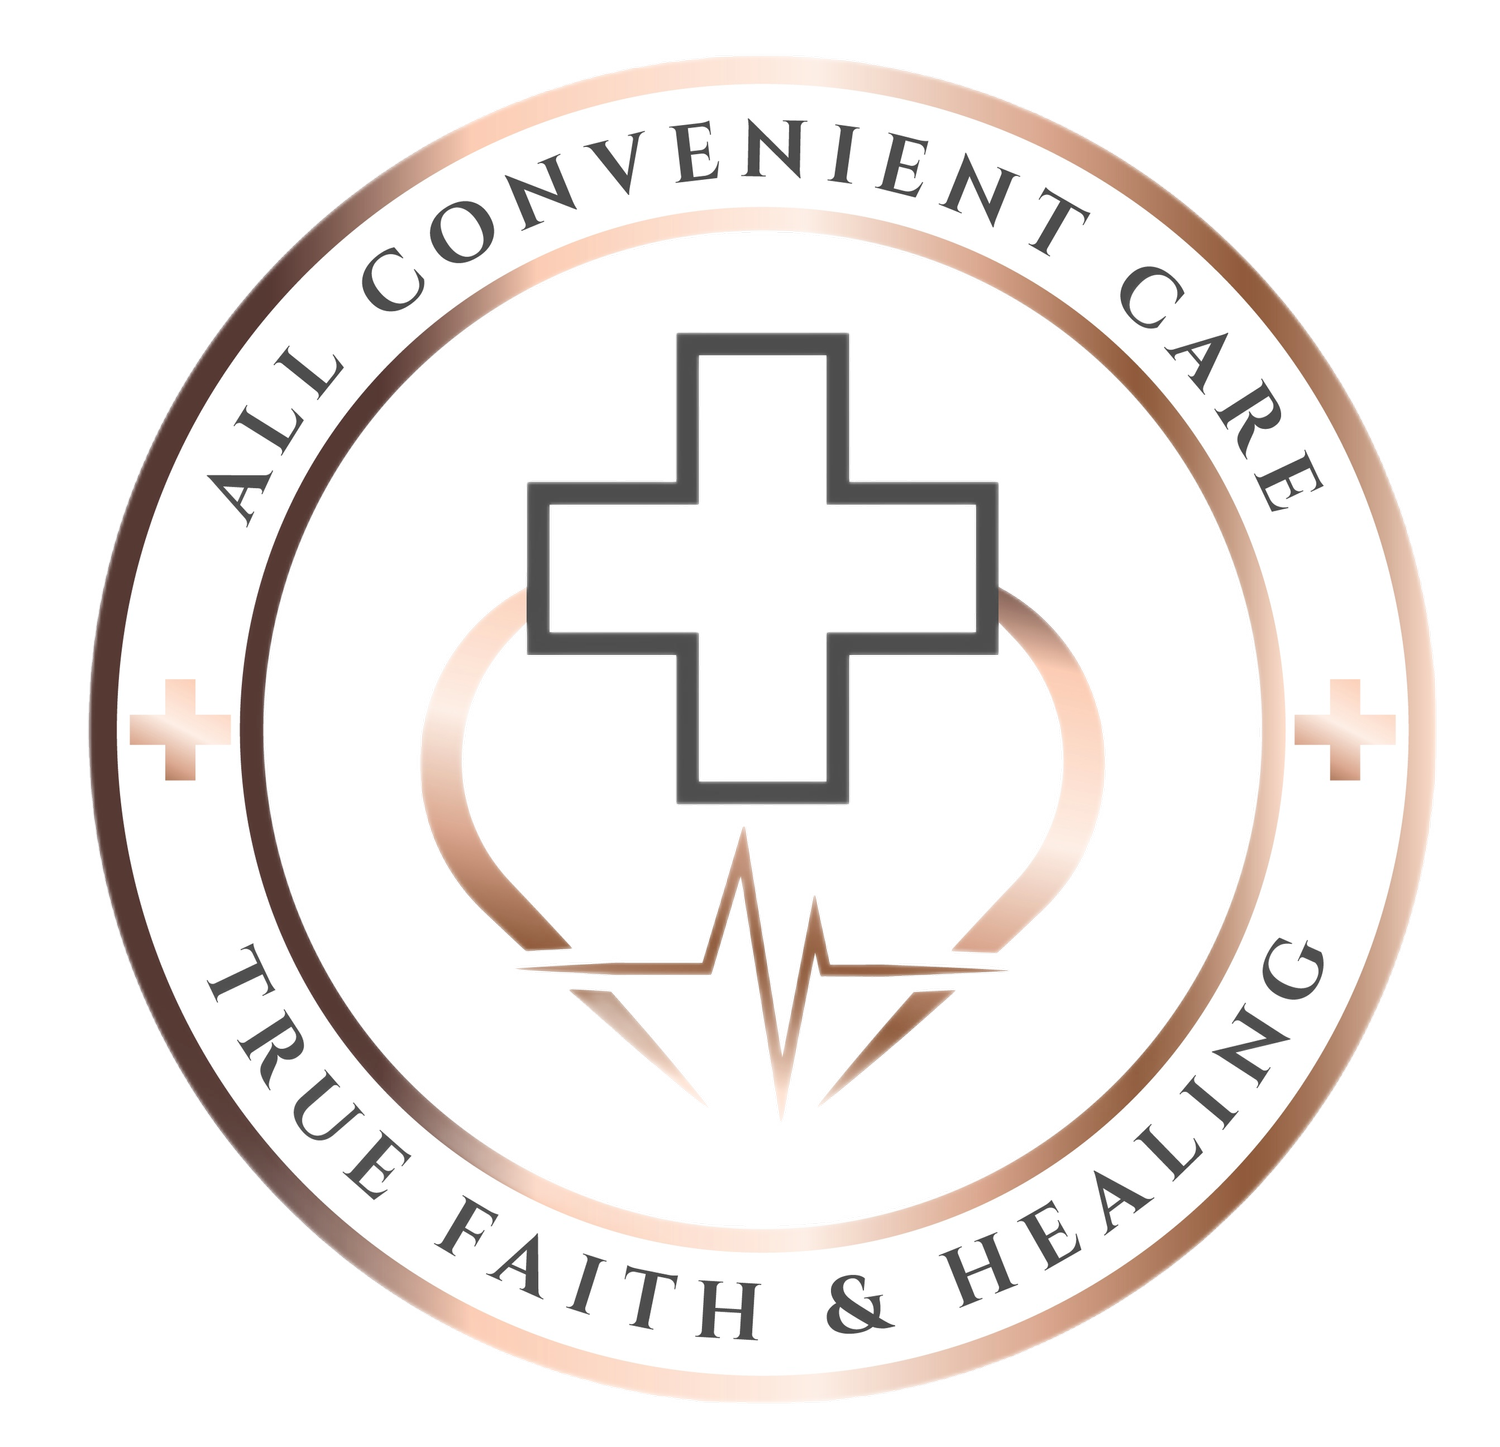 ALL Convenient Care